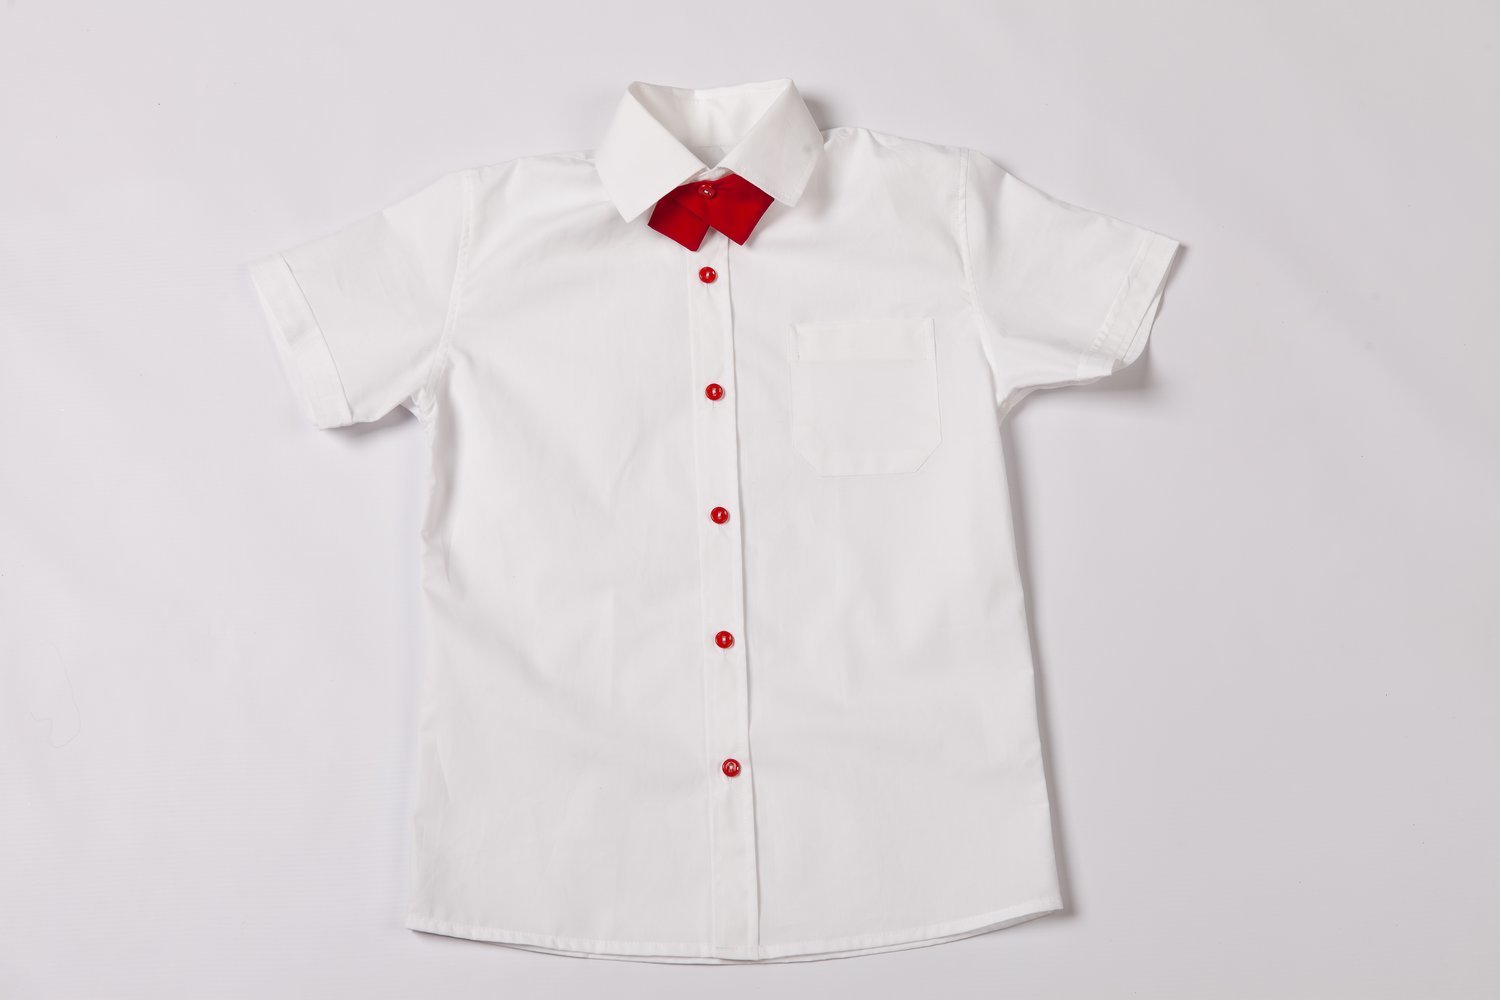 Белая рубашка с коротким рукавом для мальчика